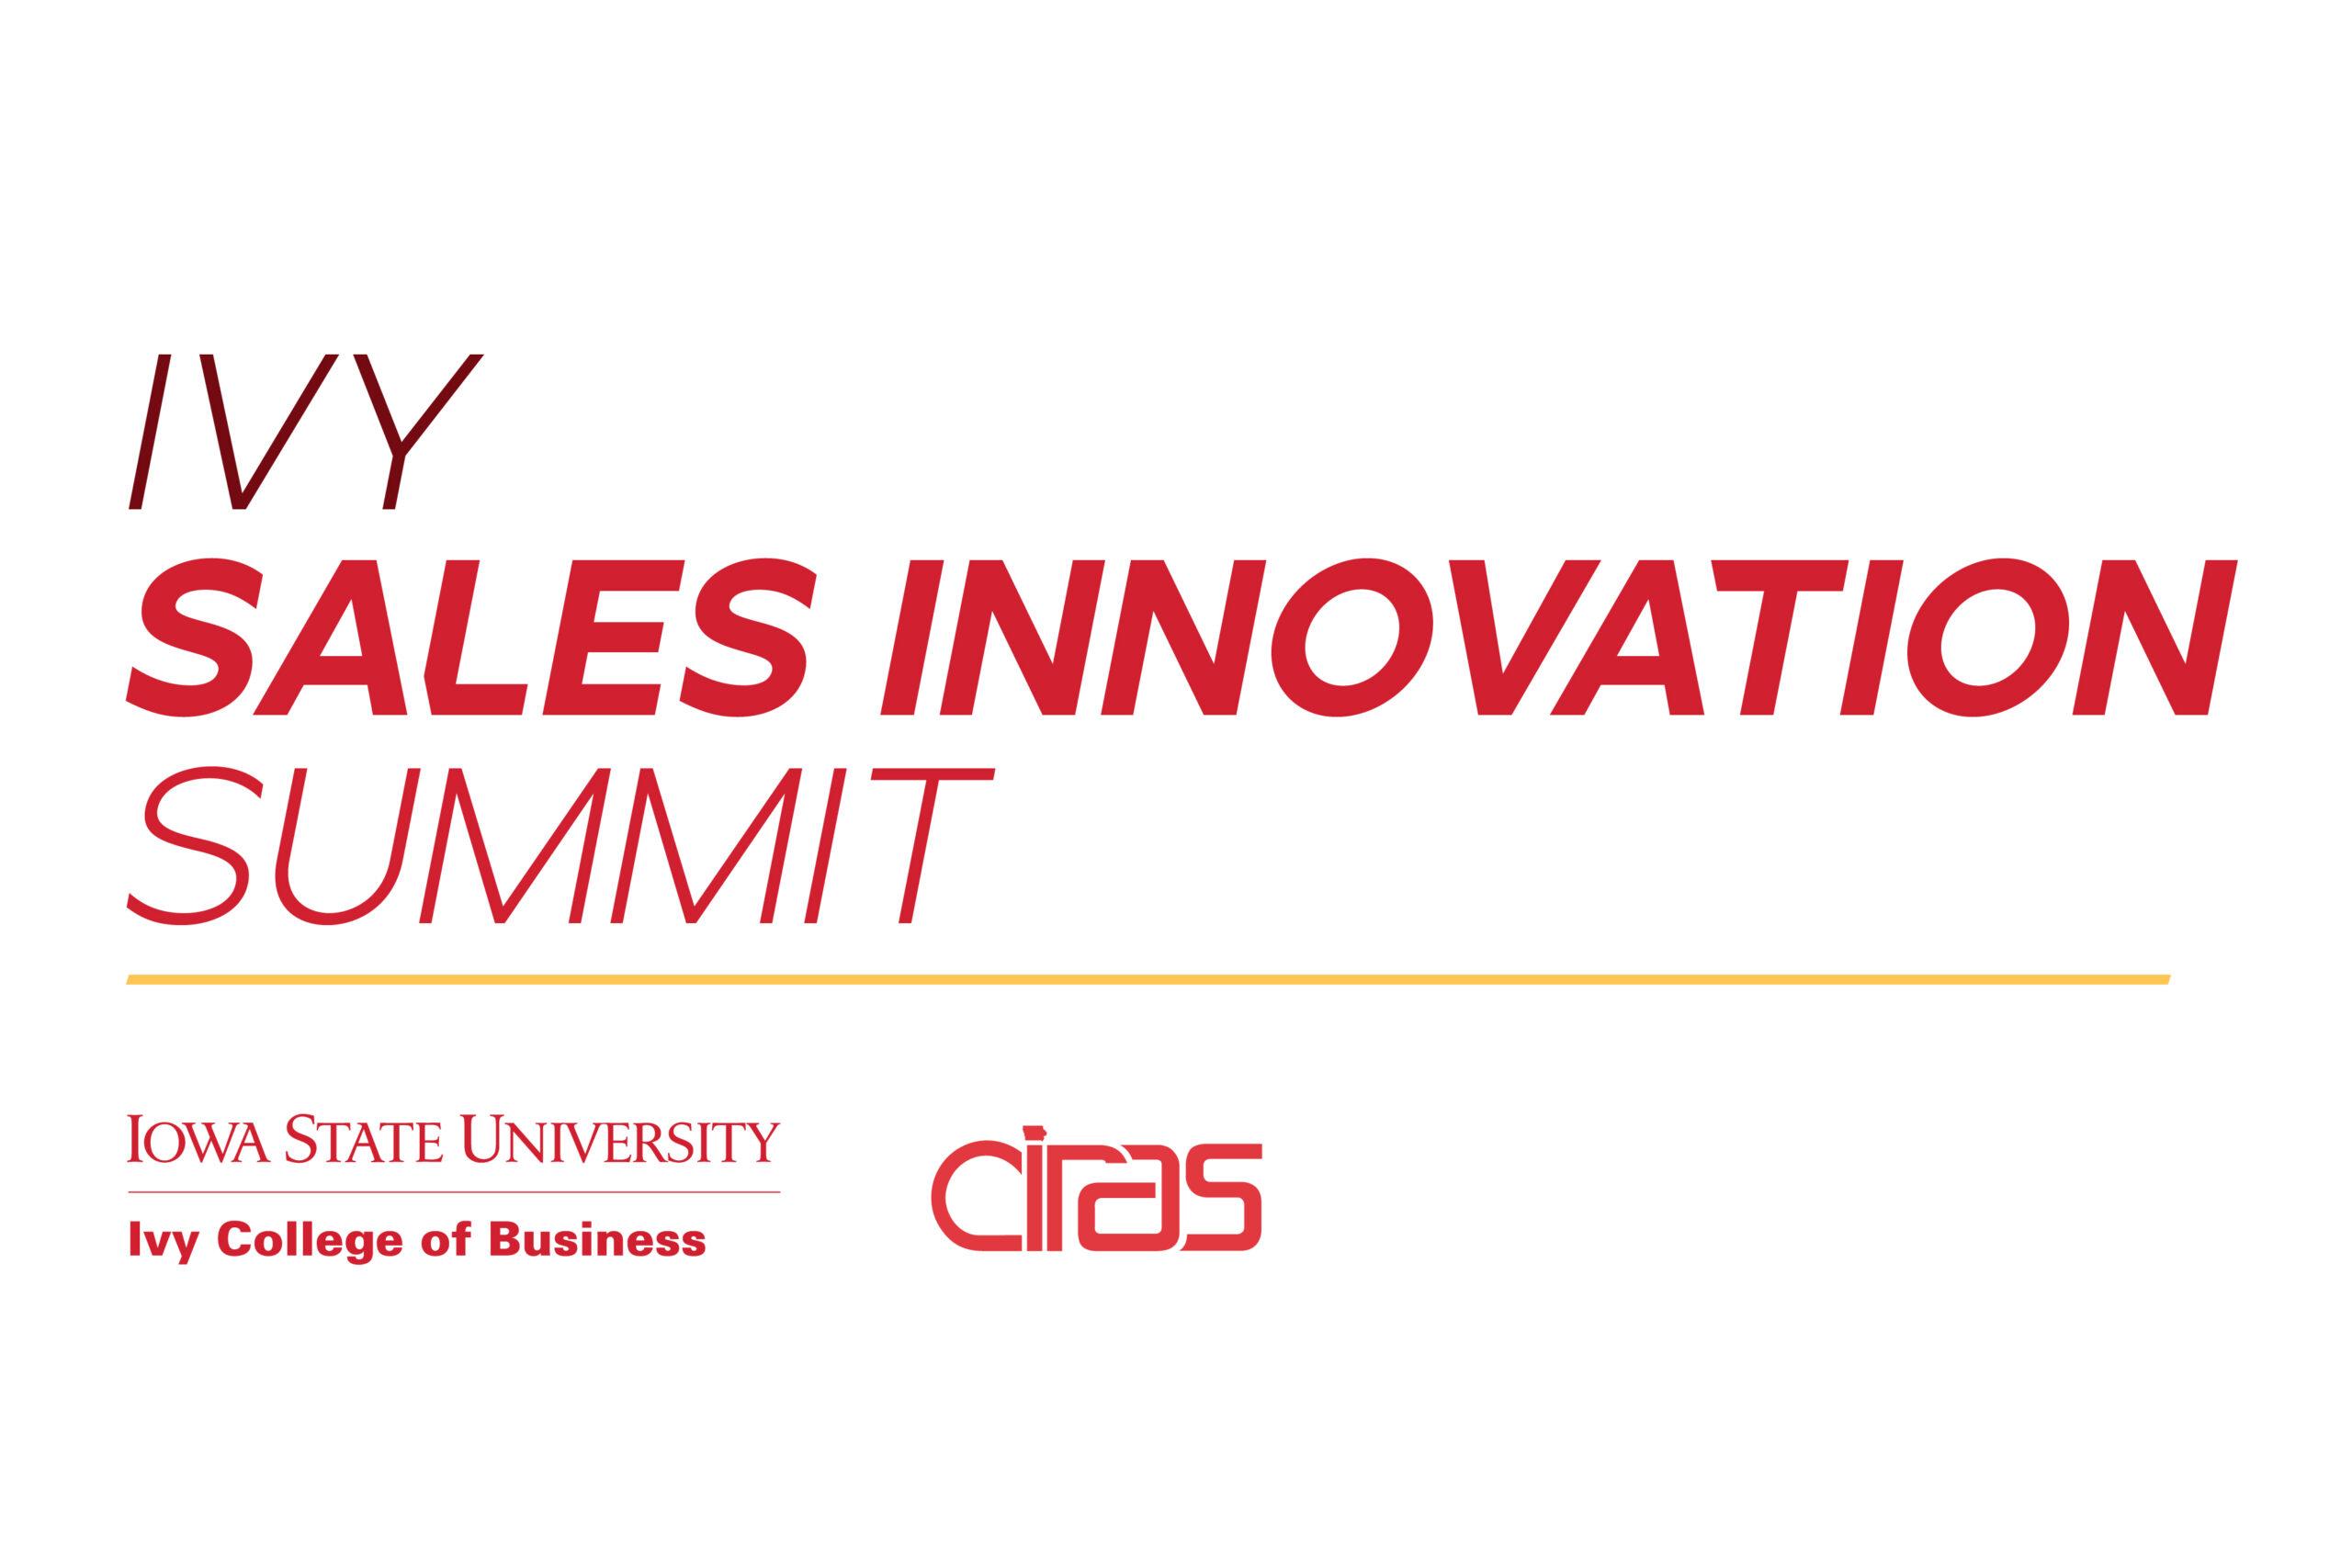 Ivy Sales Innovation Summit